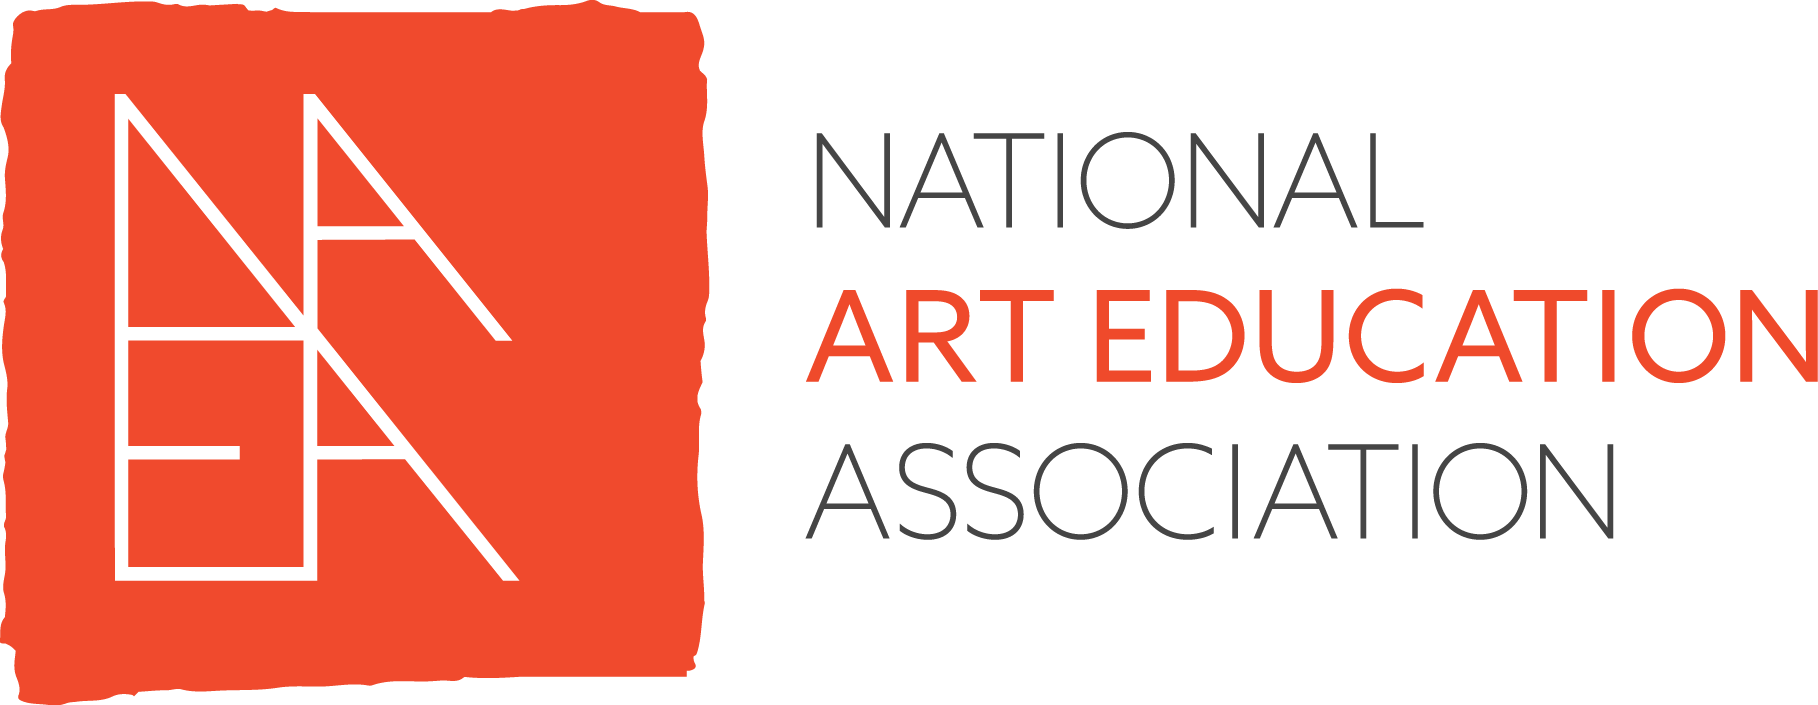 NAEA Logo [National Art Education Association] png